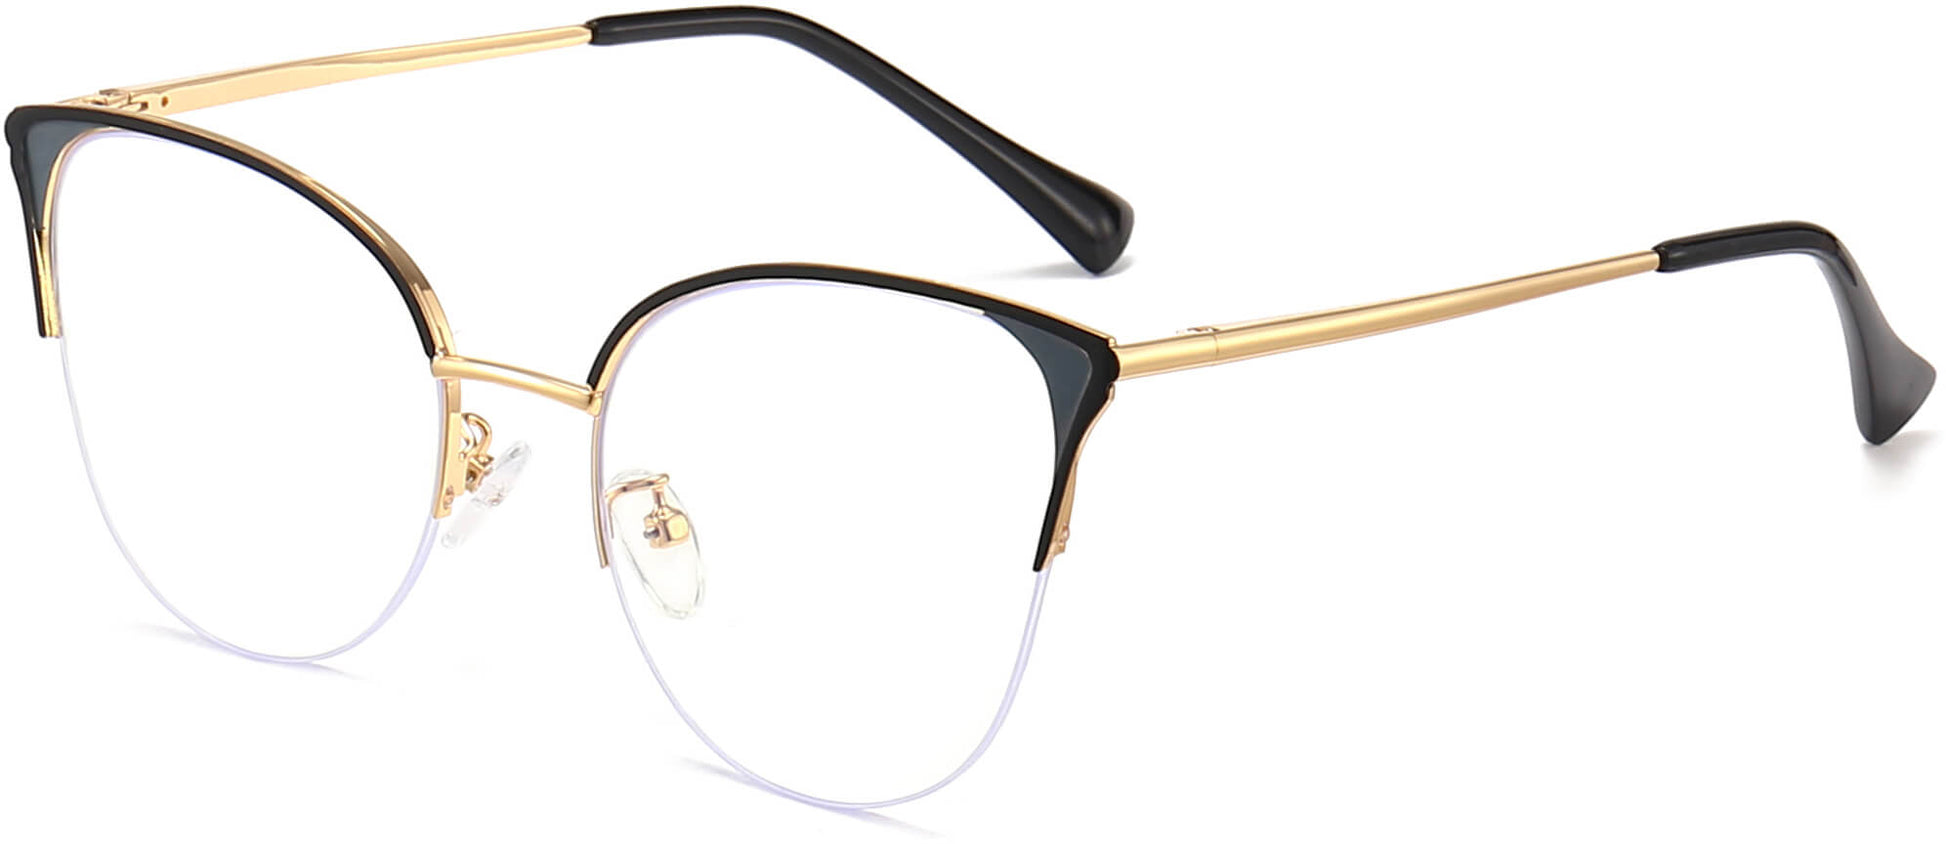 Nia Cateye Black Eyeglasses from ANRRI, angle view